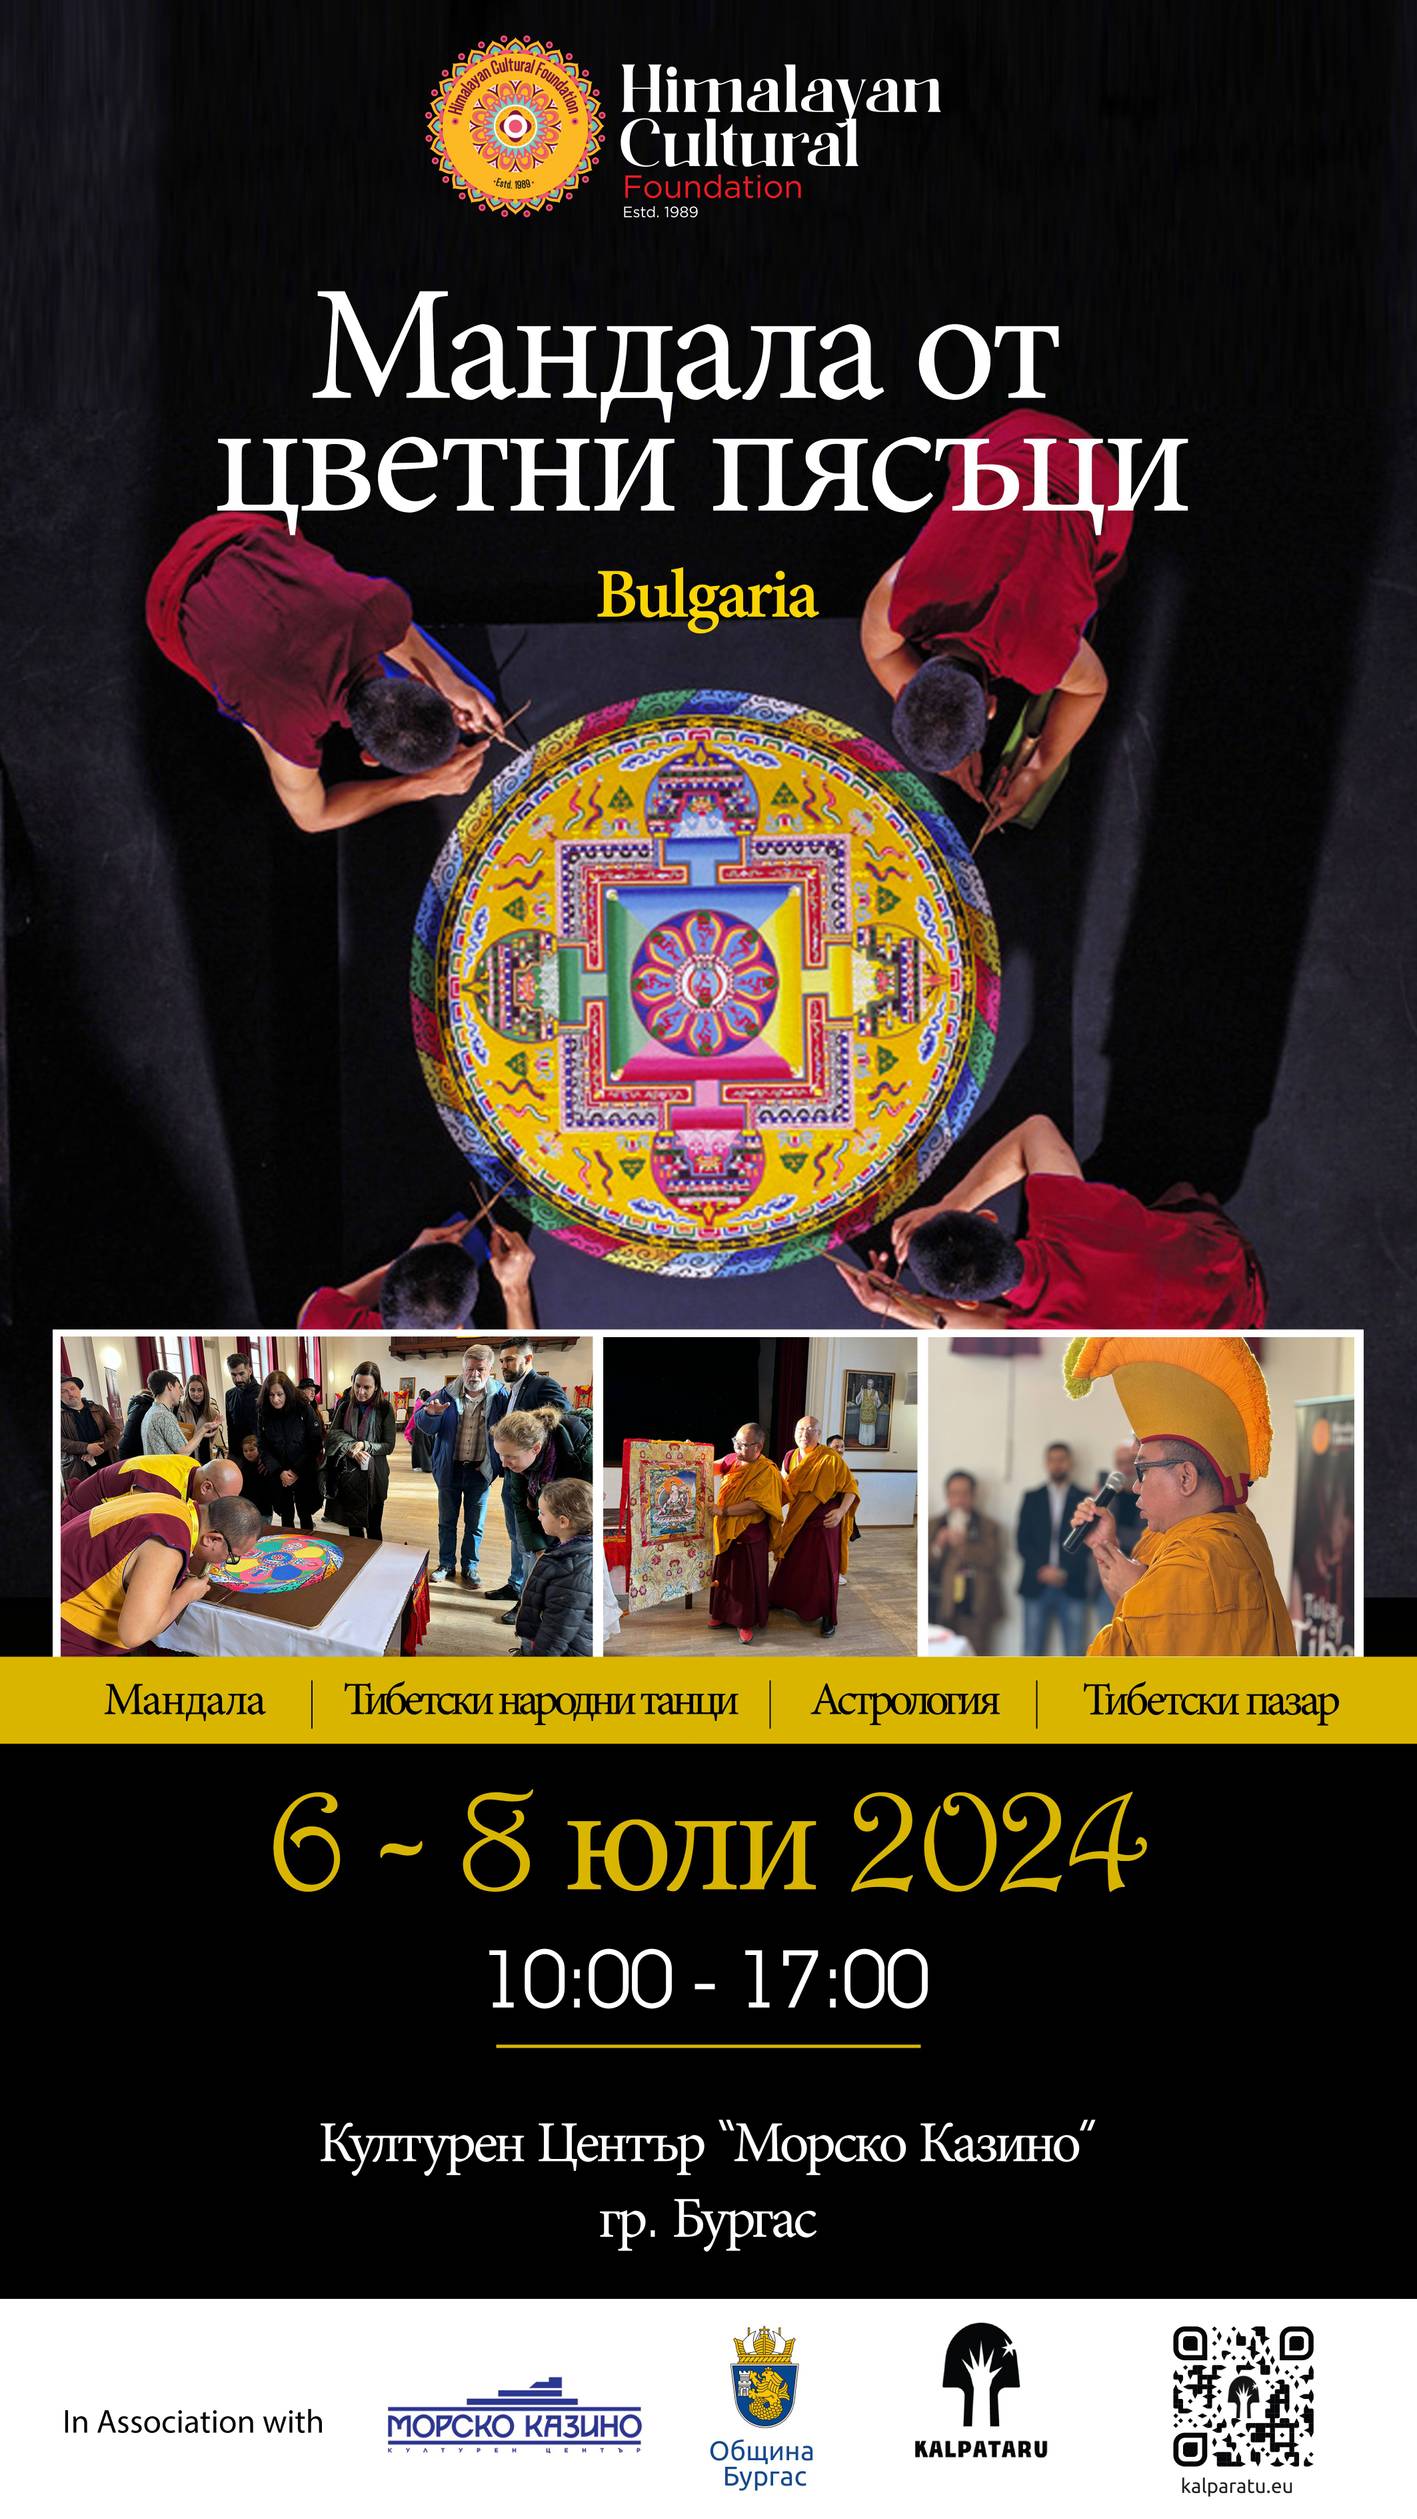 Монаси на Далай Лама пристигат в Бургас